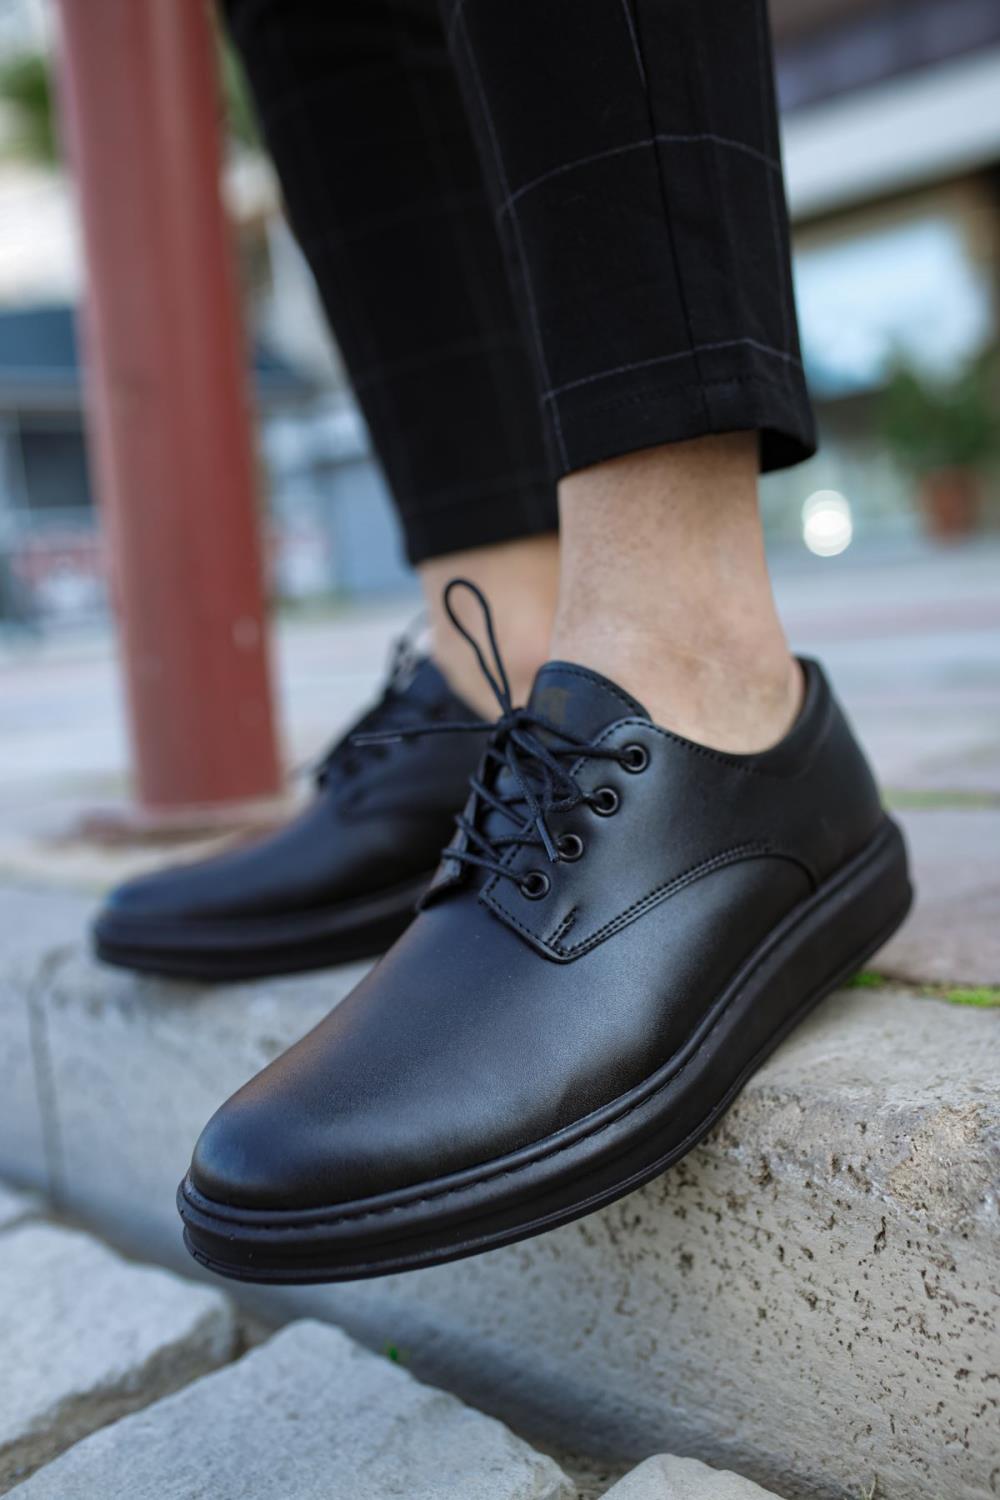 Knack Klasik Erkek Ayakkabı 001 Siyah (Siyah Taban) m5532